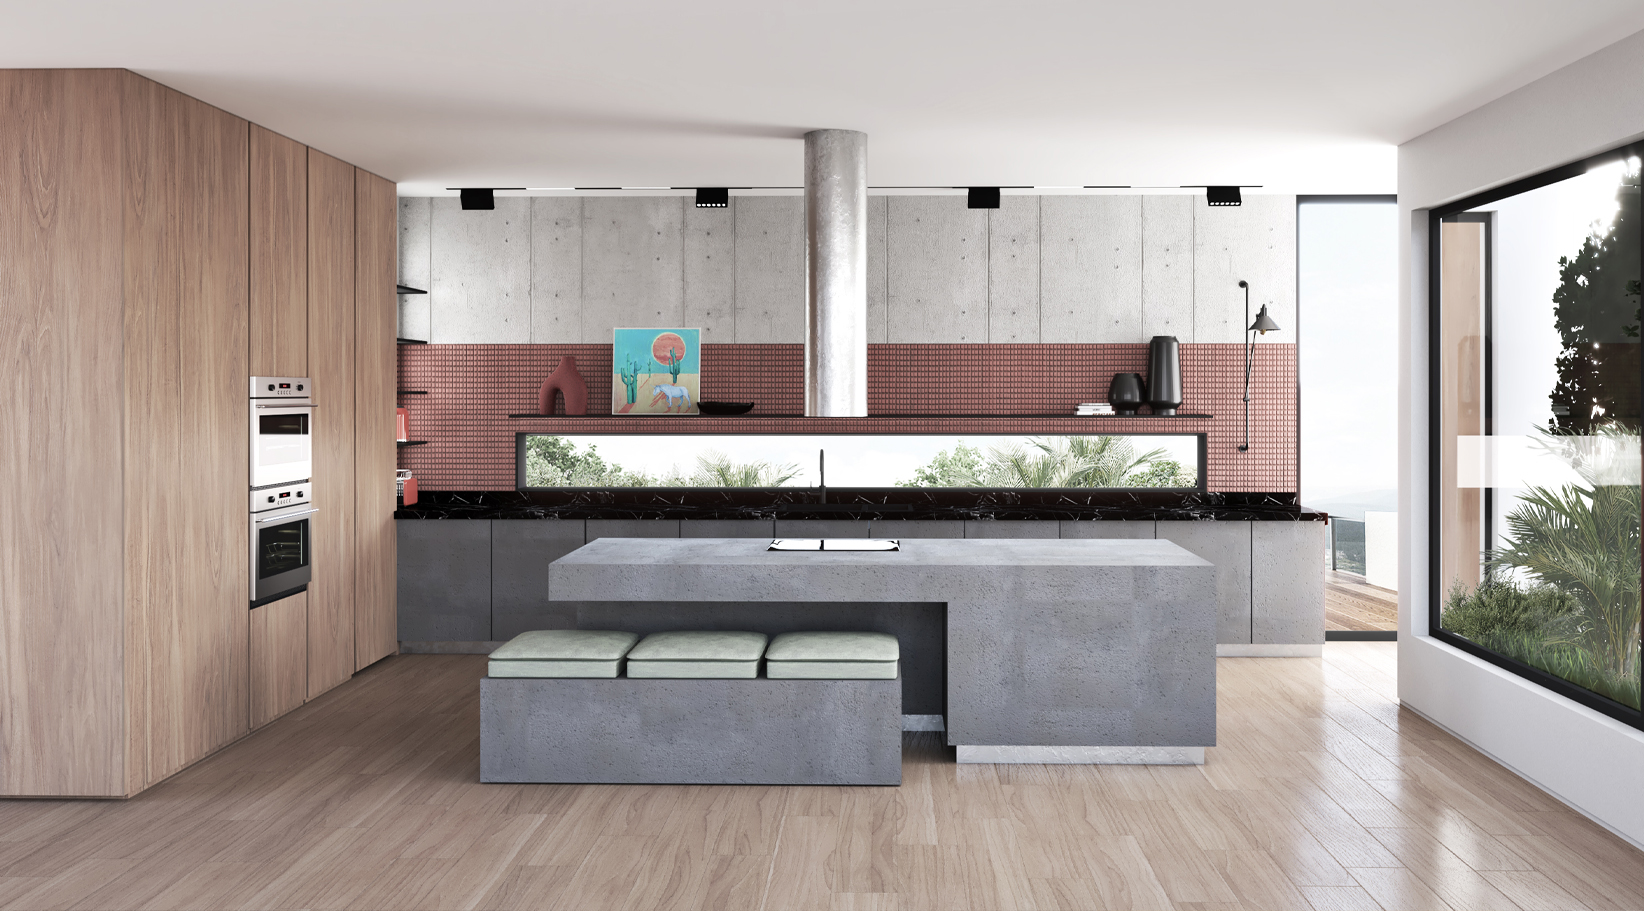 3-interior-design-livingroom-amazing-penthouse-loft-luxury-modern-kitchen-tiles